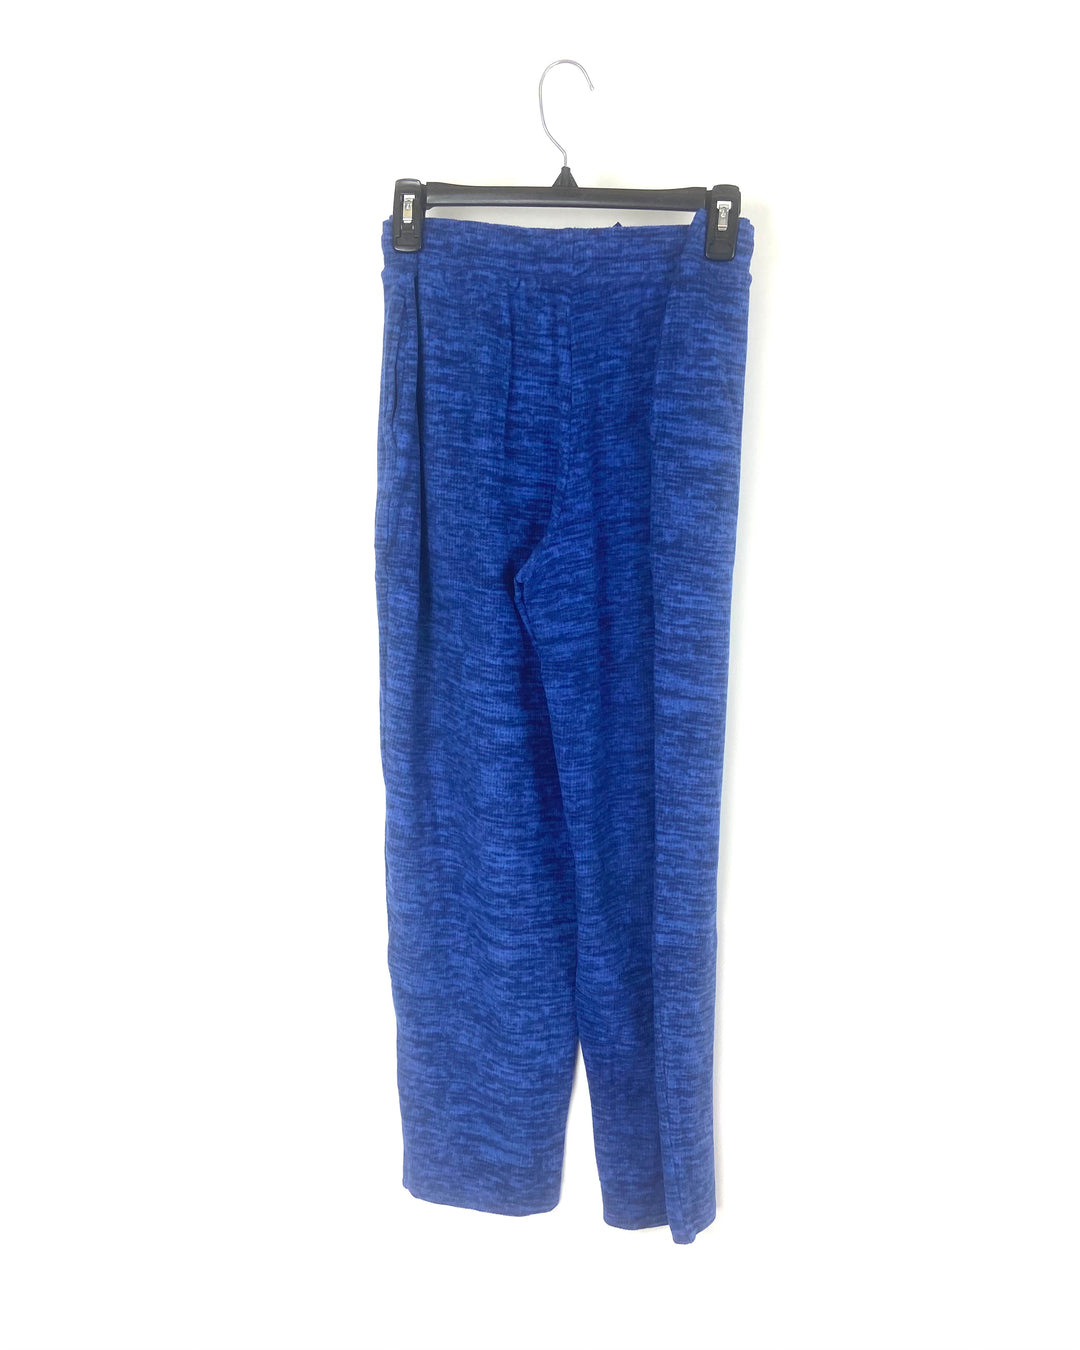 Soft Blue Pajama Set - Small